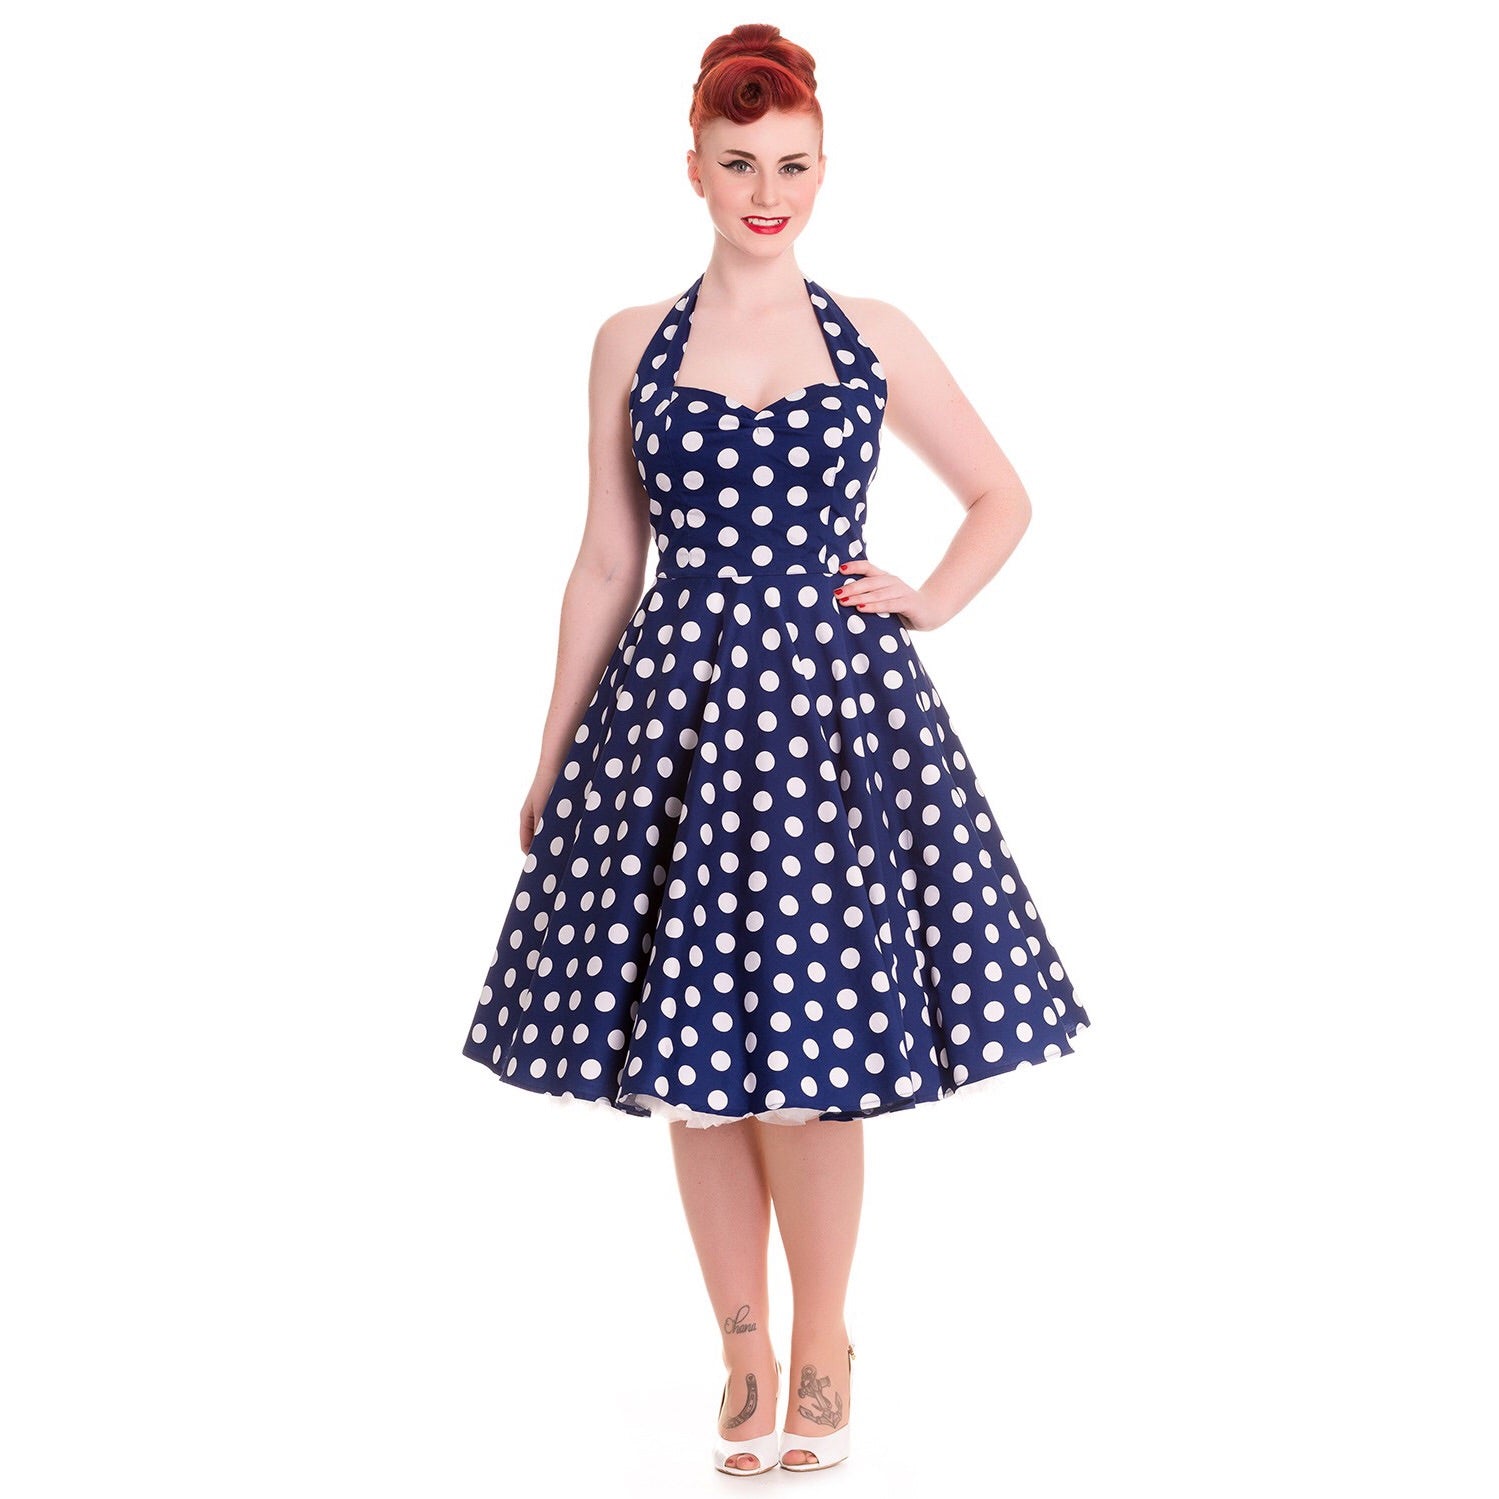 navy dress with polka dots